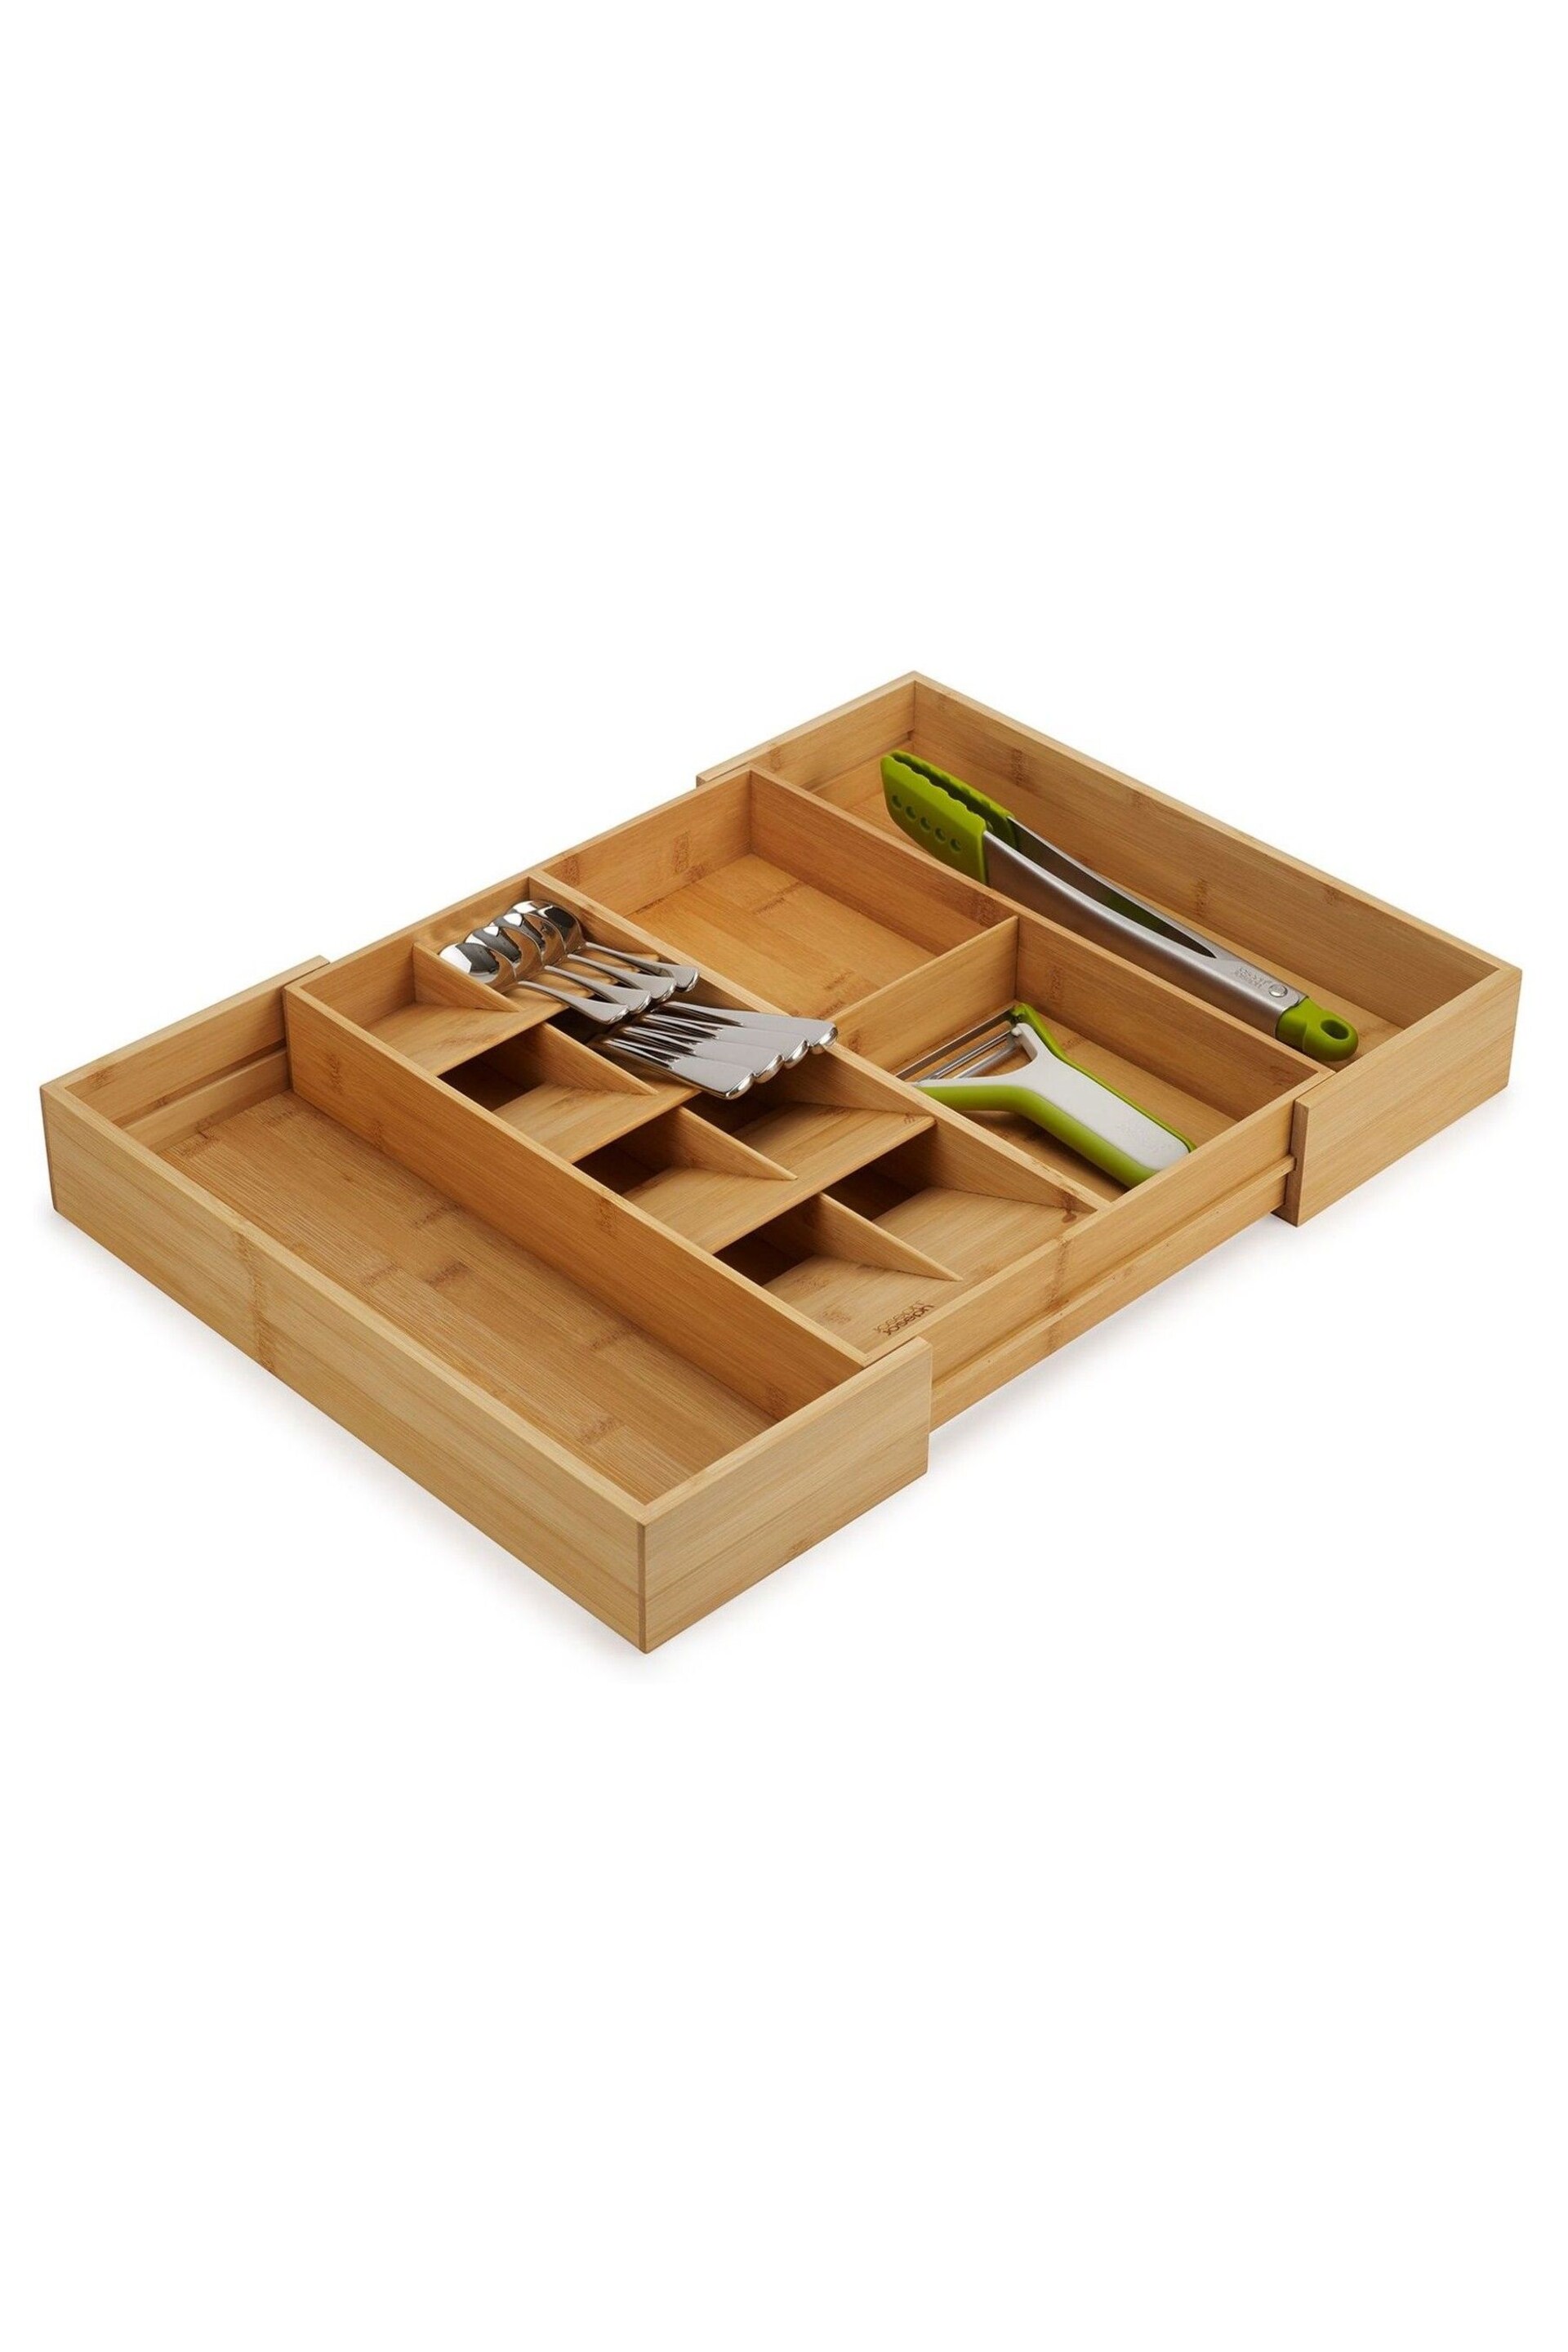 Joseph Joseph Bamboo Expandable Cutlery Utensil and Gadgets Organiser - Image 4 of 4